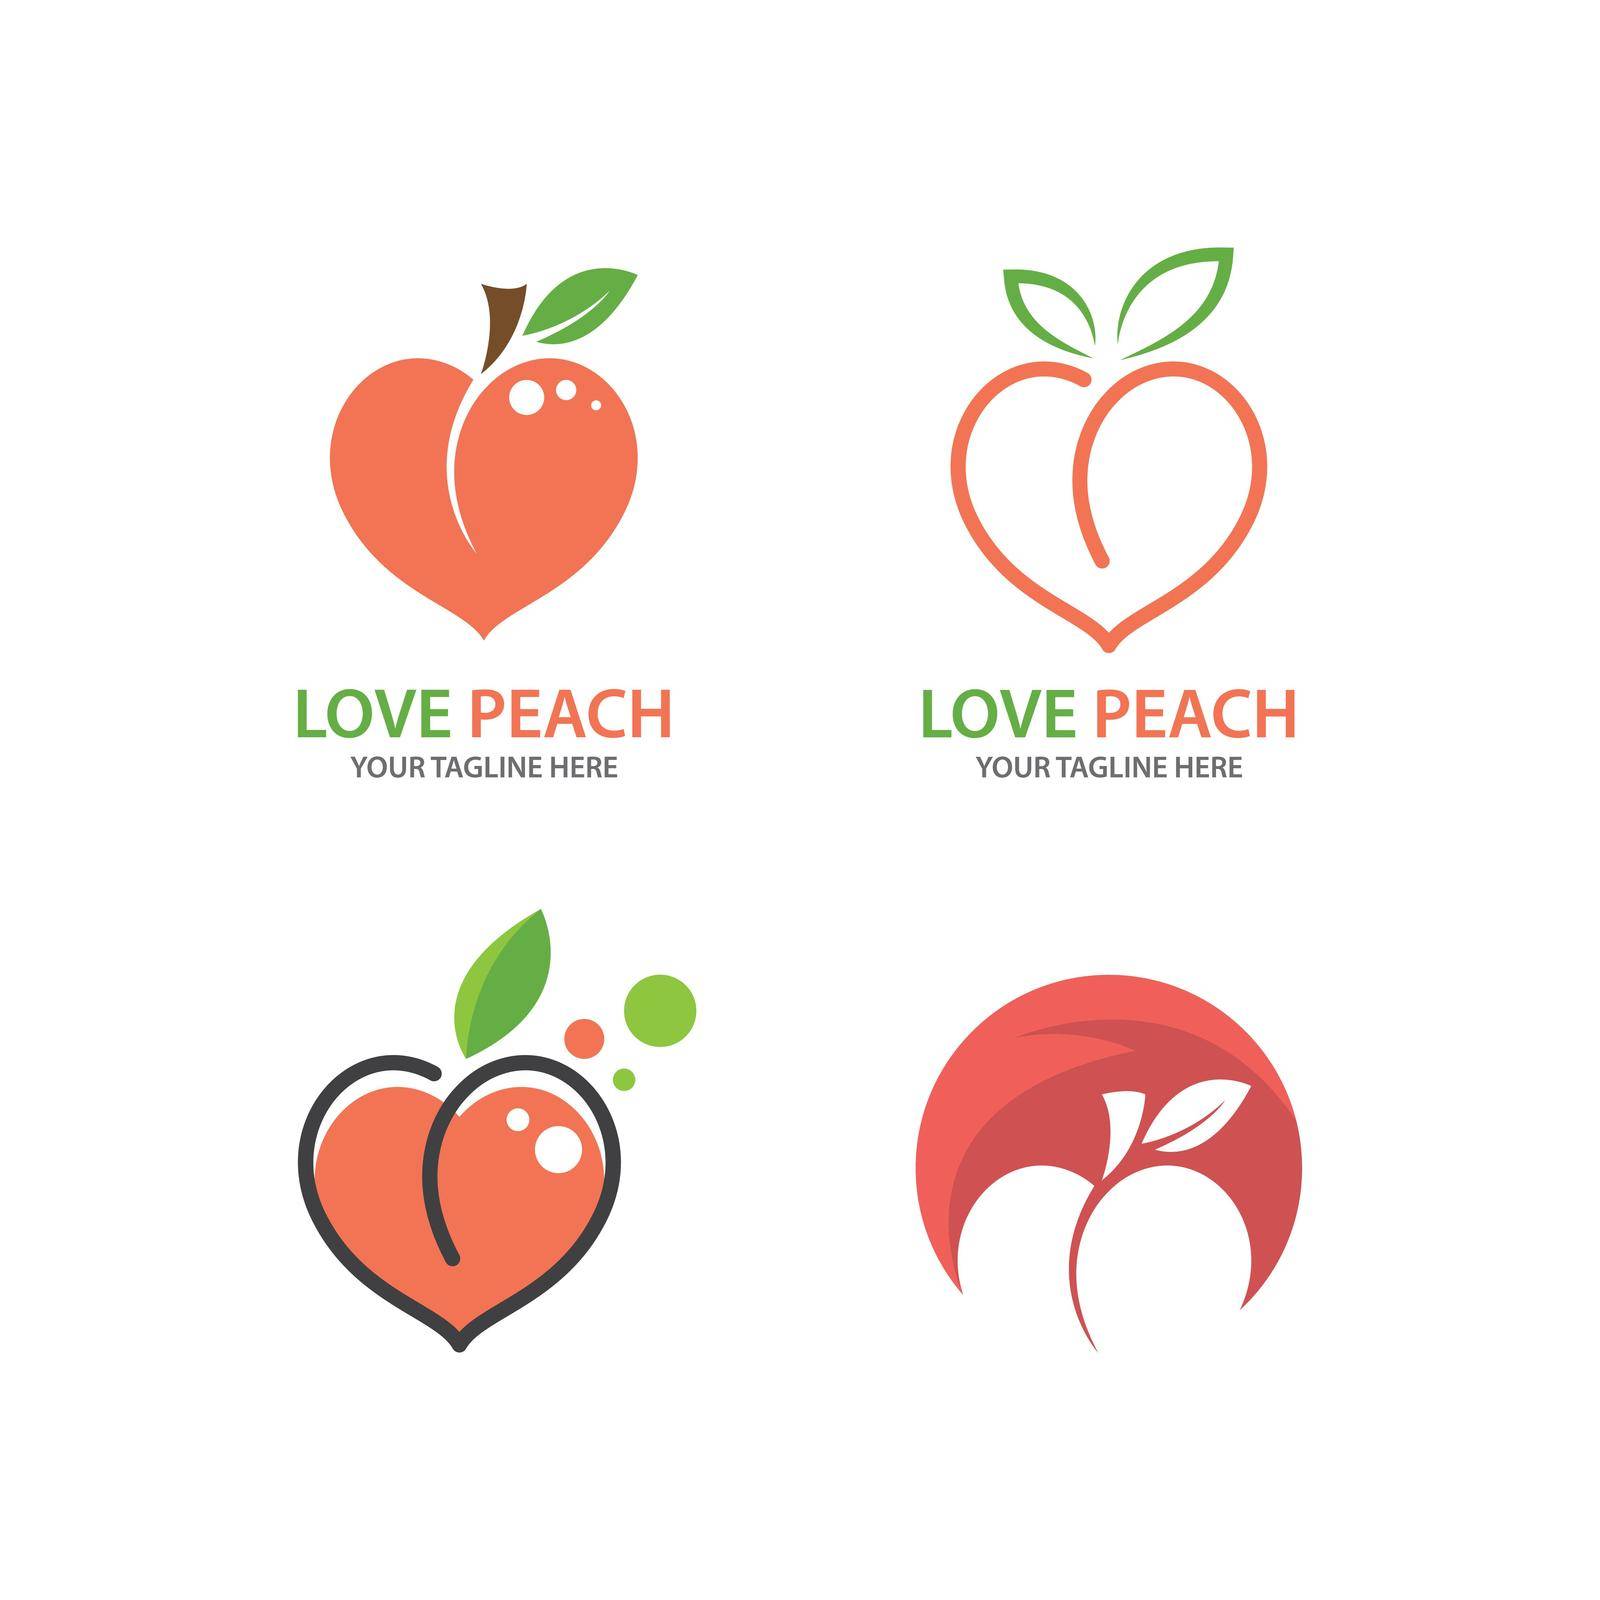 Peach fruit illustration logo design